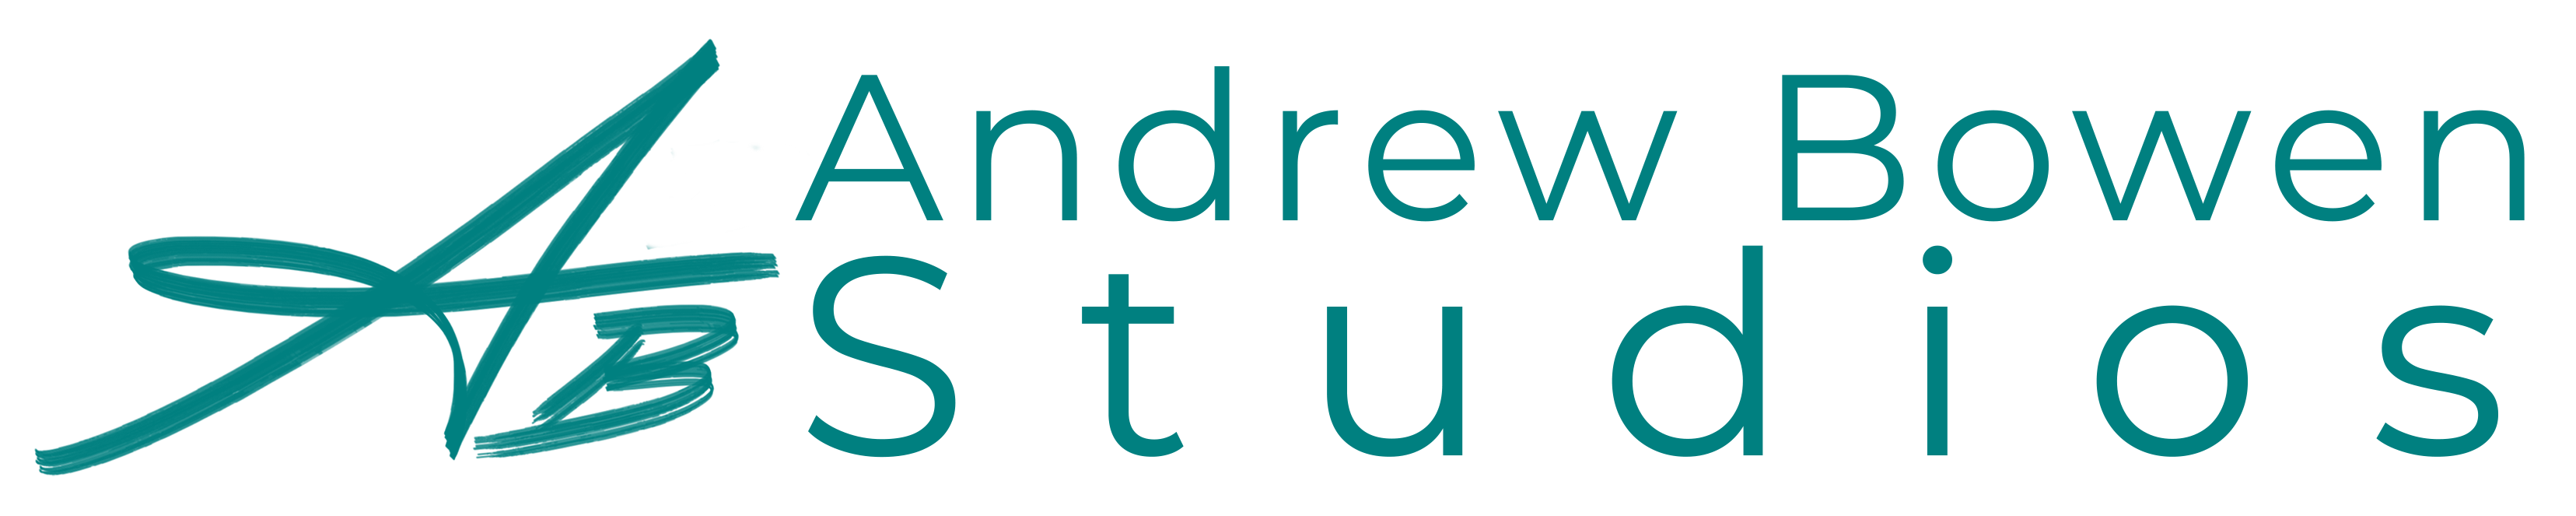 Andrew Bowen Studios logo